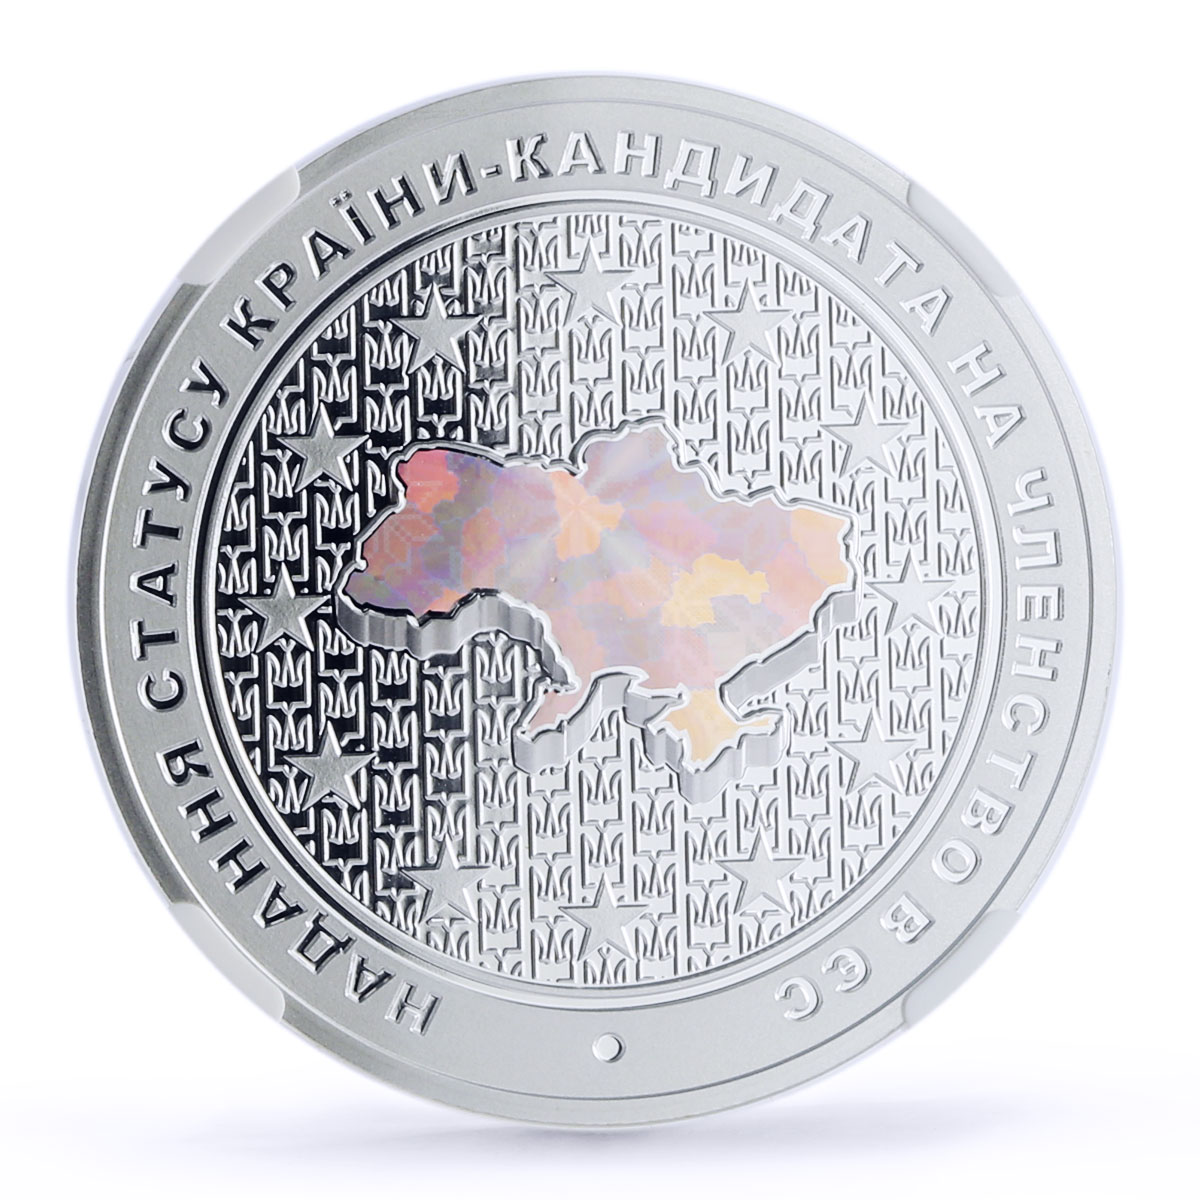 Ukraine 10 hryvnias EU Membership Candidate PF70 NGC hologram silver coin 2022